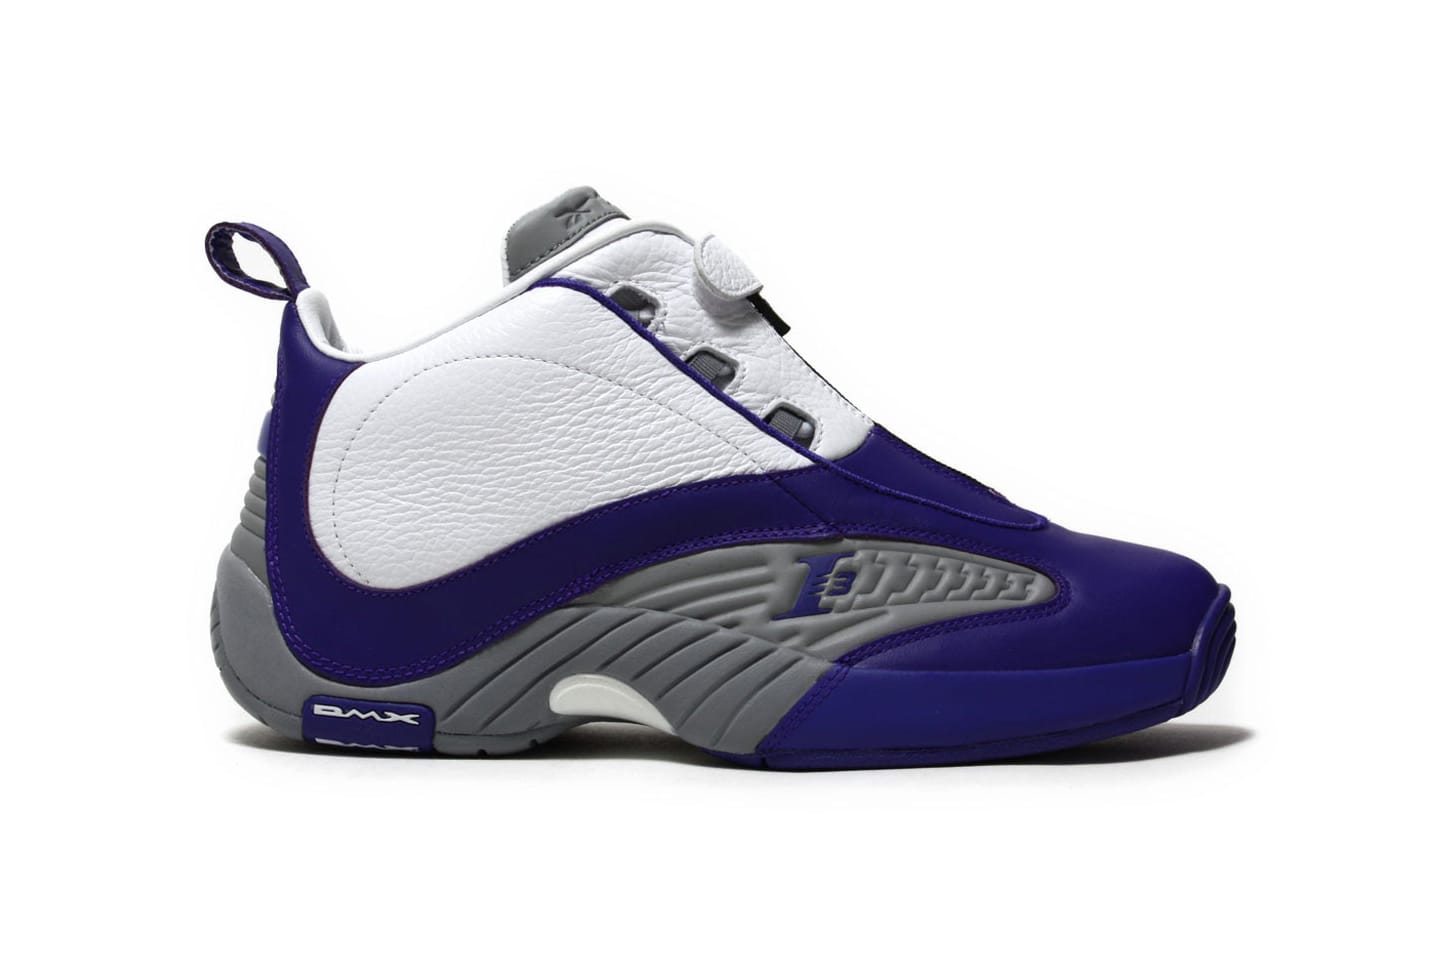 purple iverson sneakers